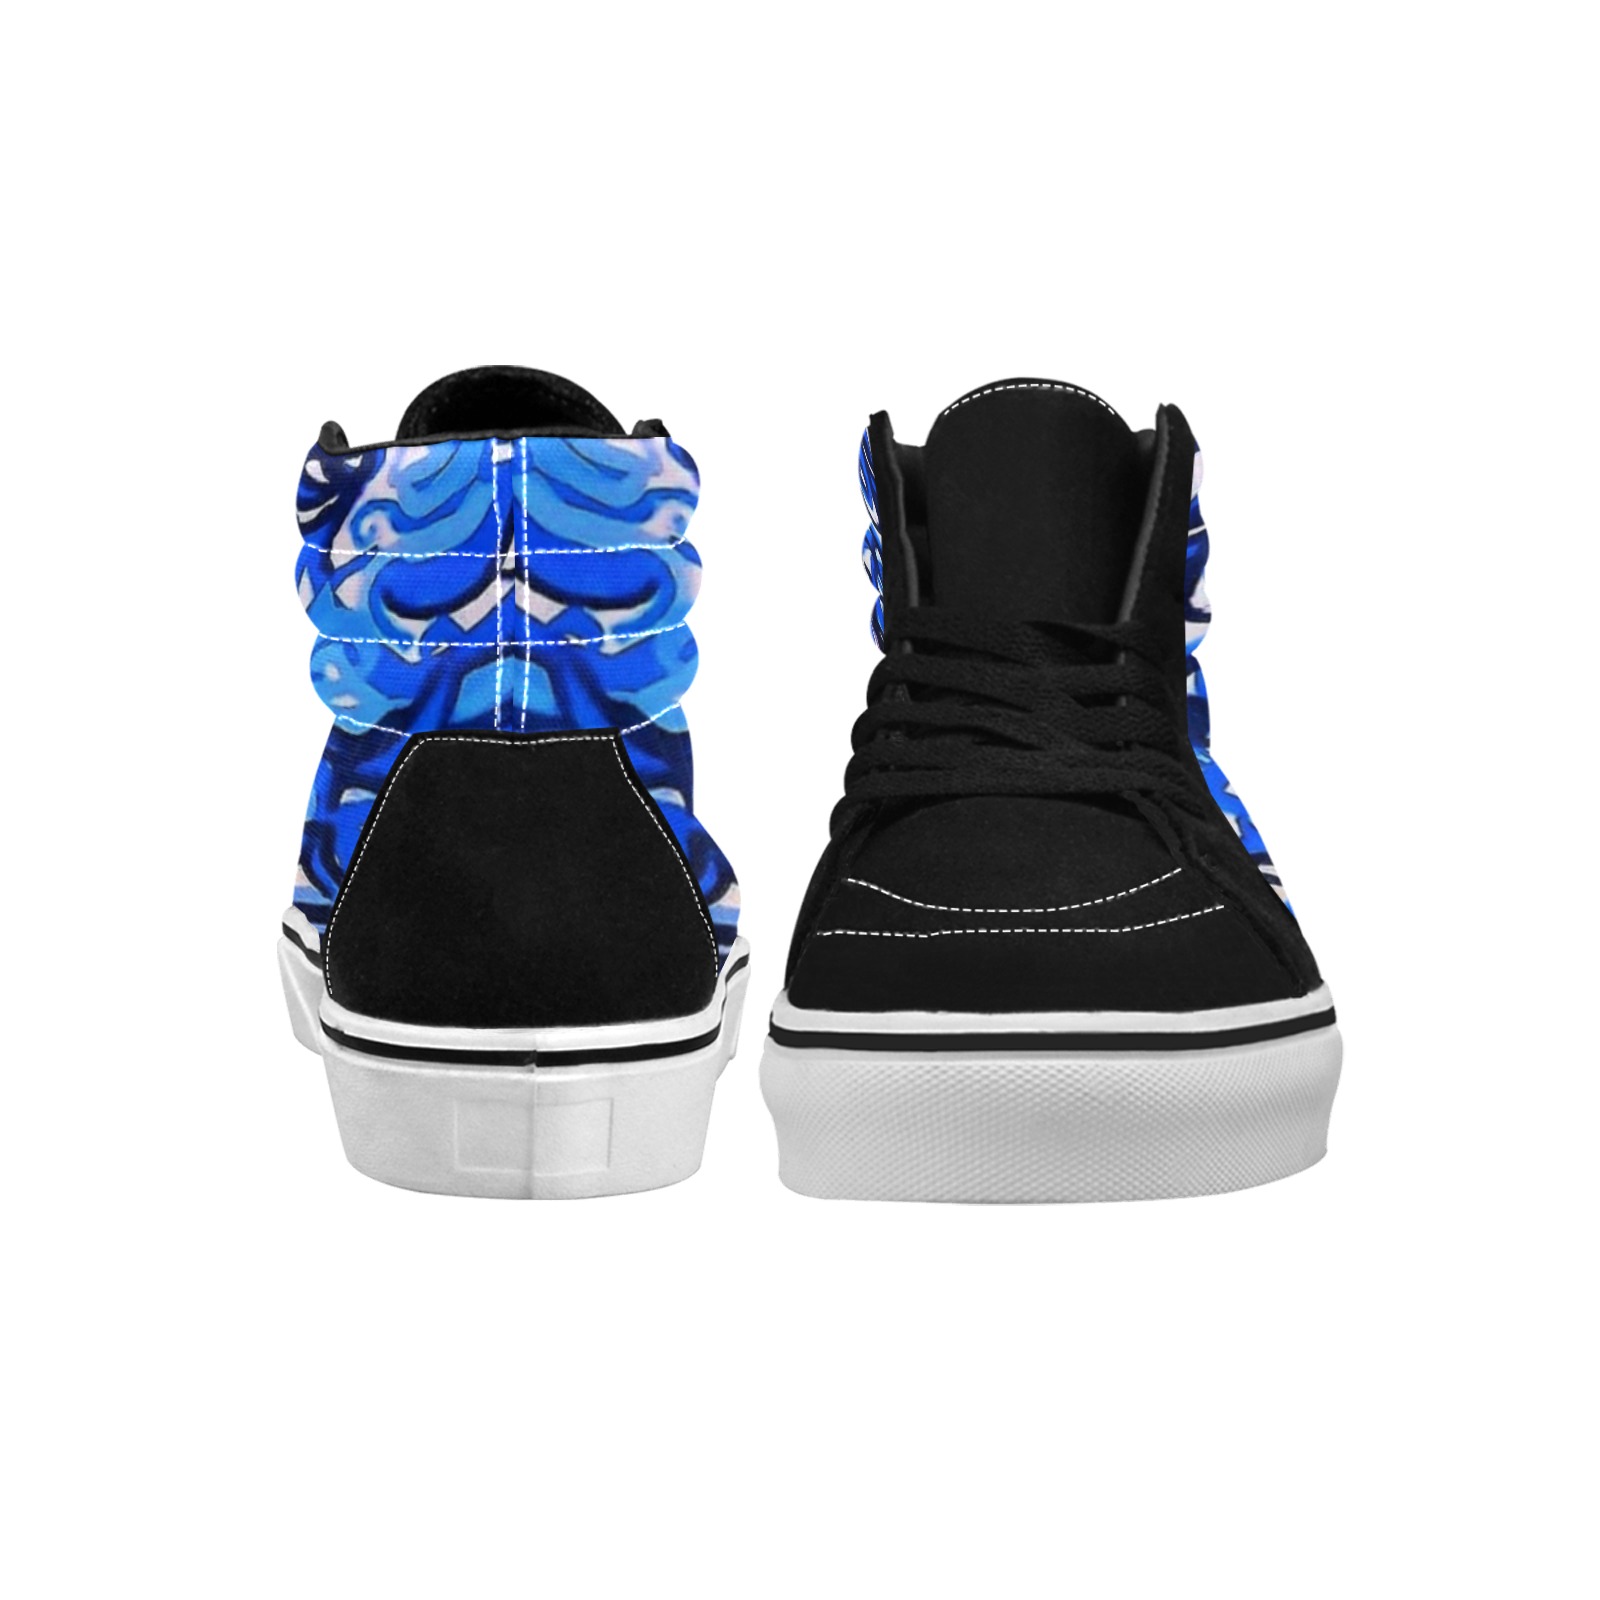 blue graffiti drawing Men's High Top Skateboarding Shoes (Model E001-1)